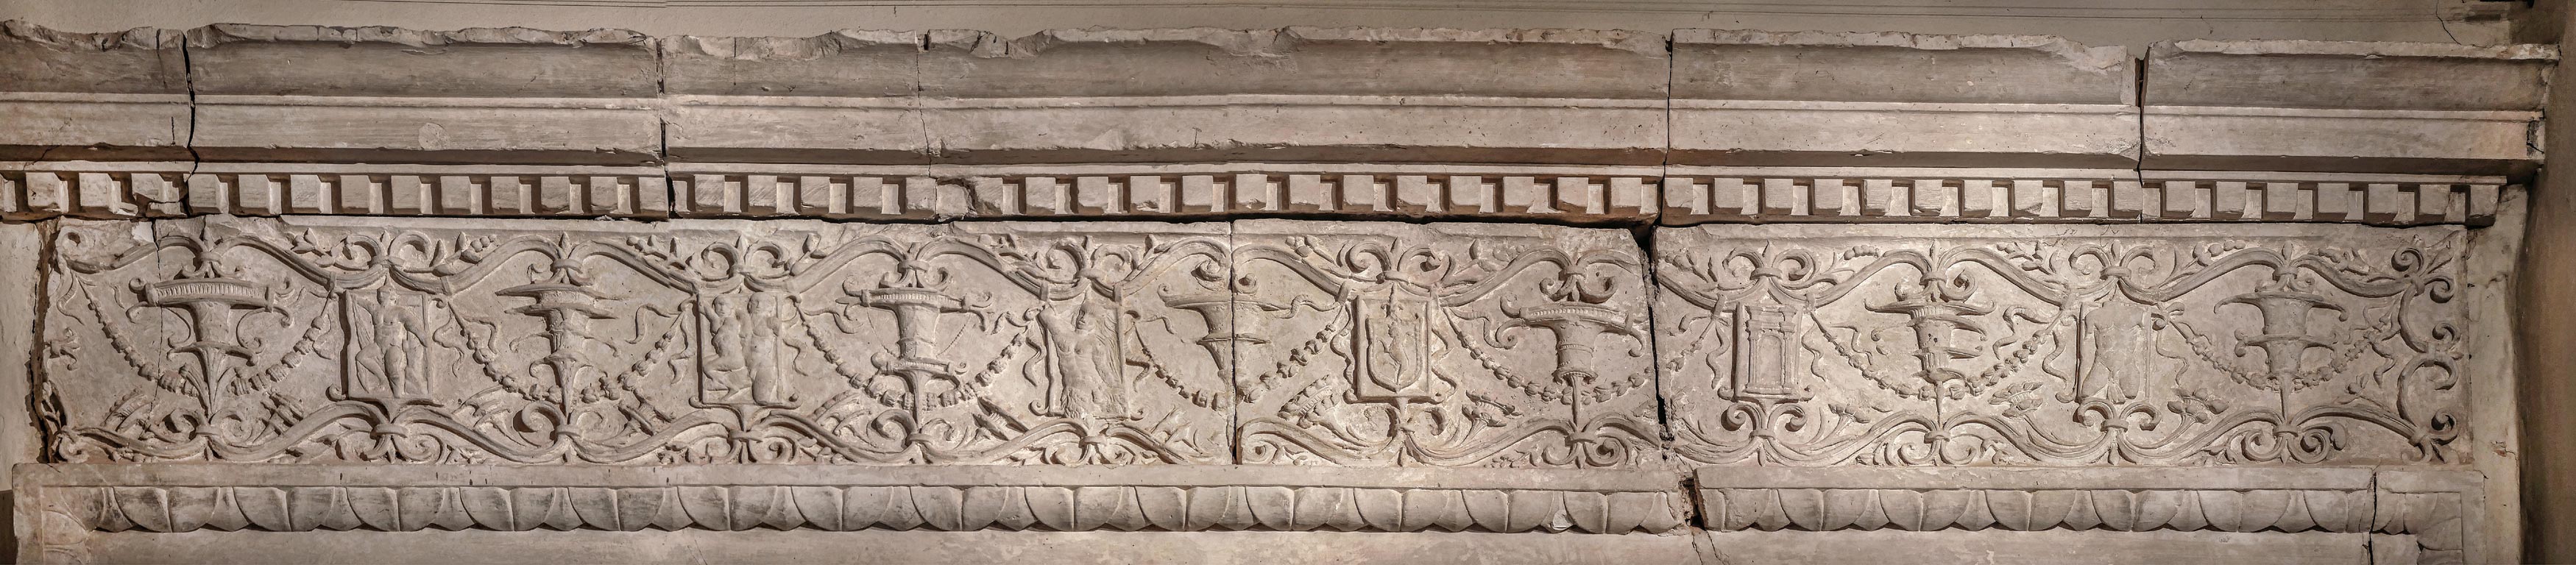 The lintel frieze of the Porta Magna (1505 - 1508).